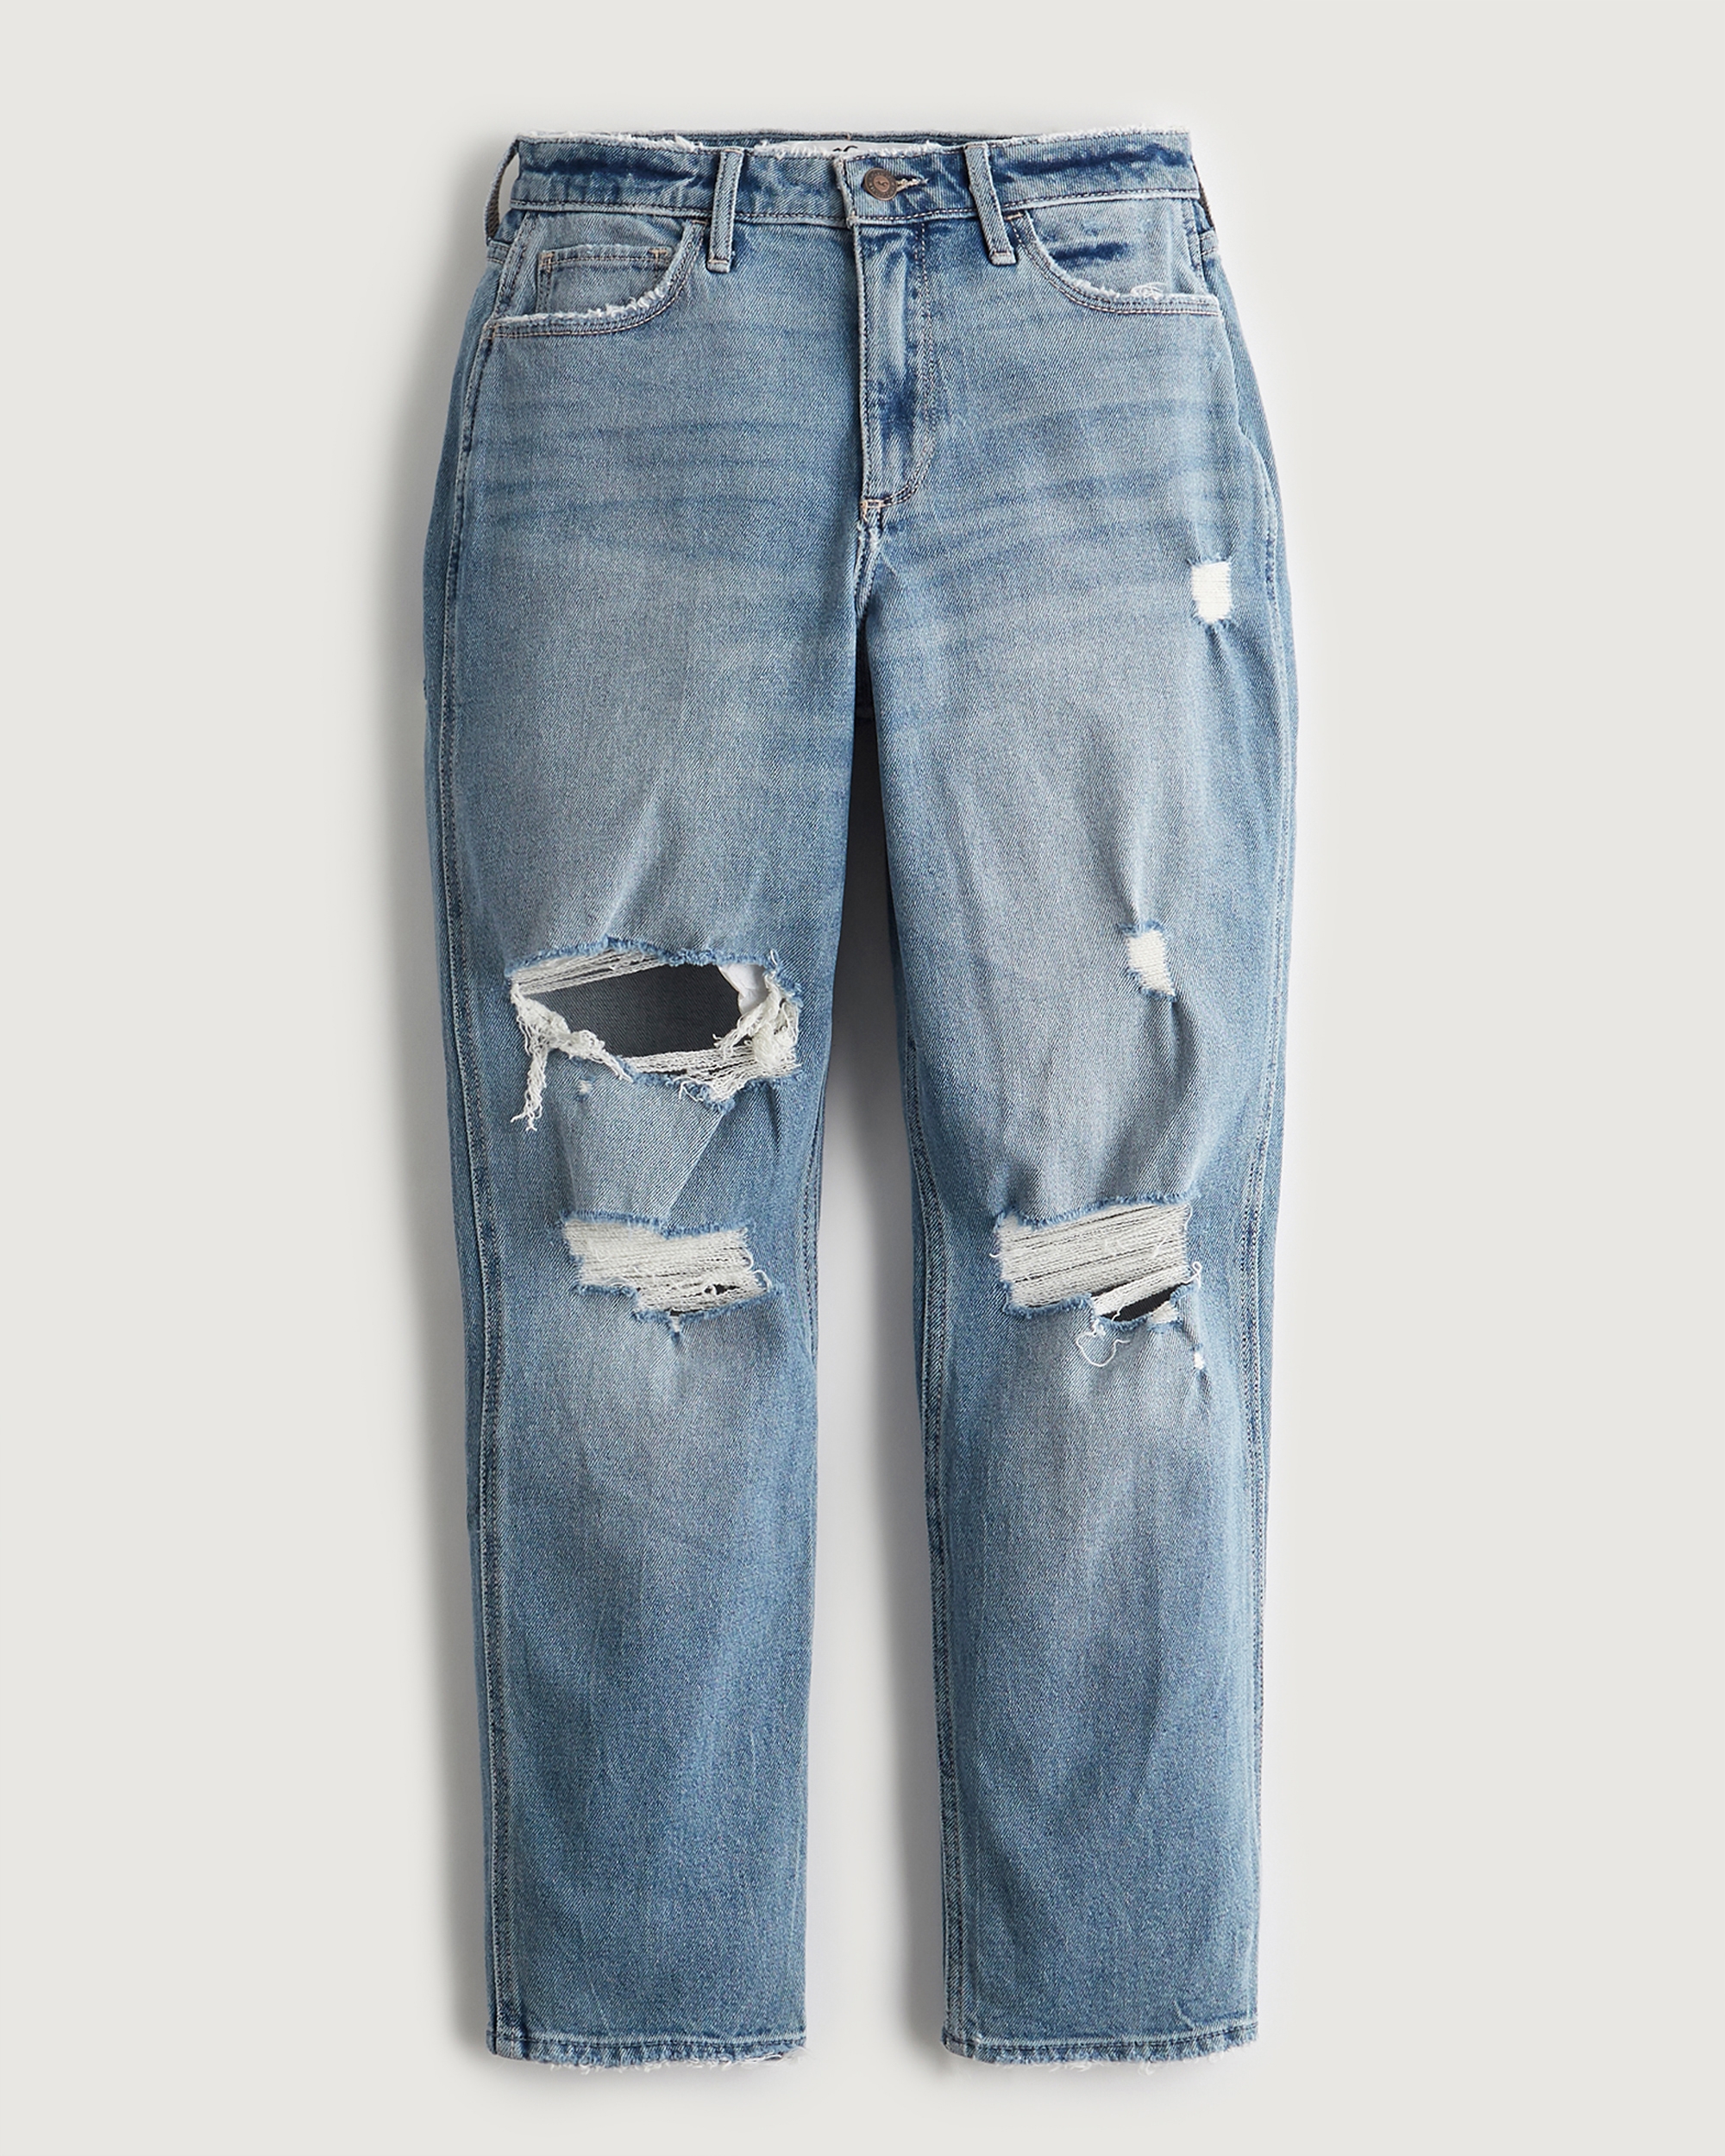 hollister jeans for girls